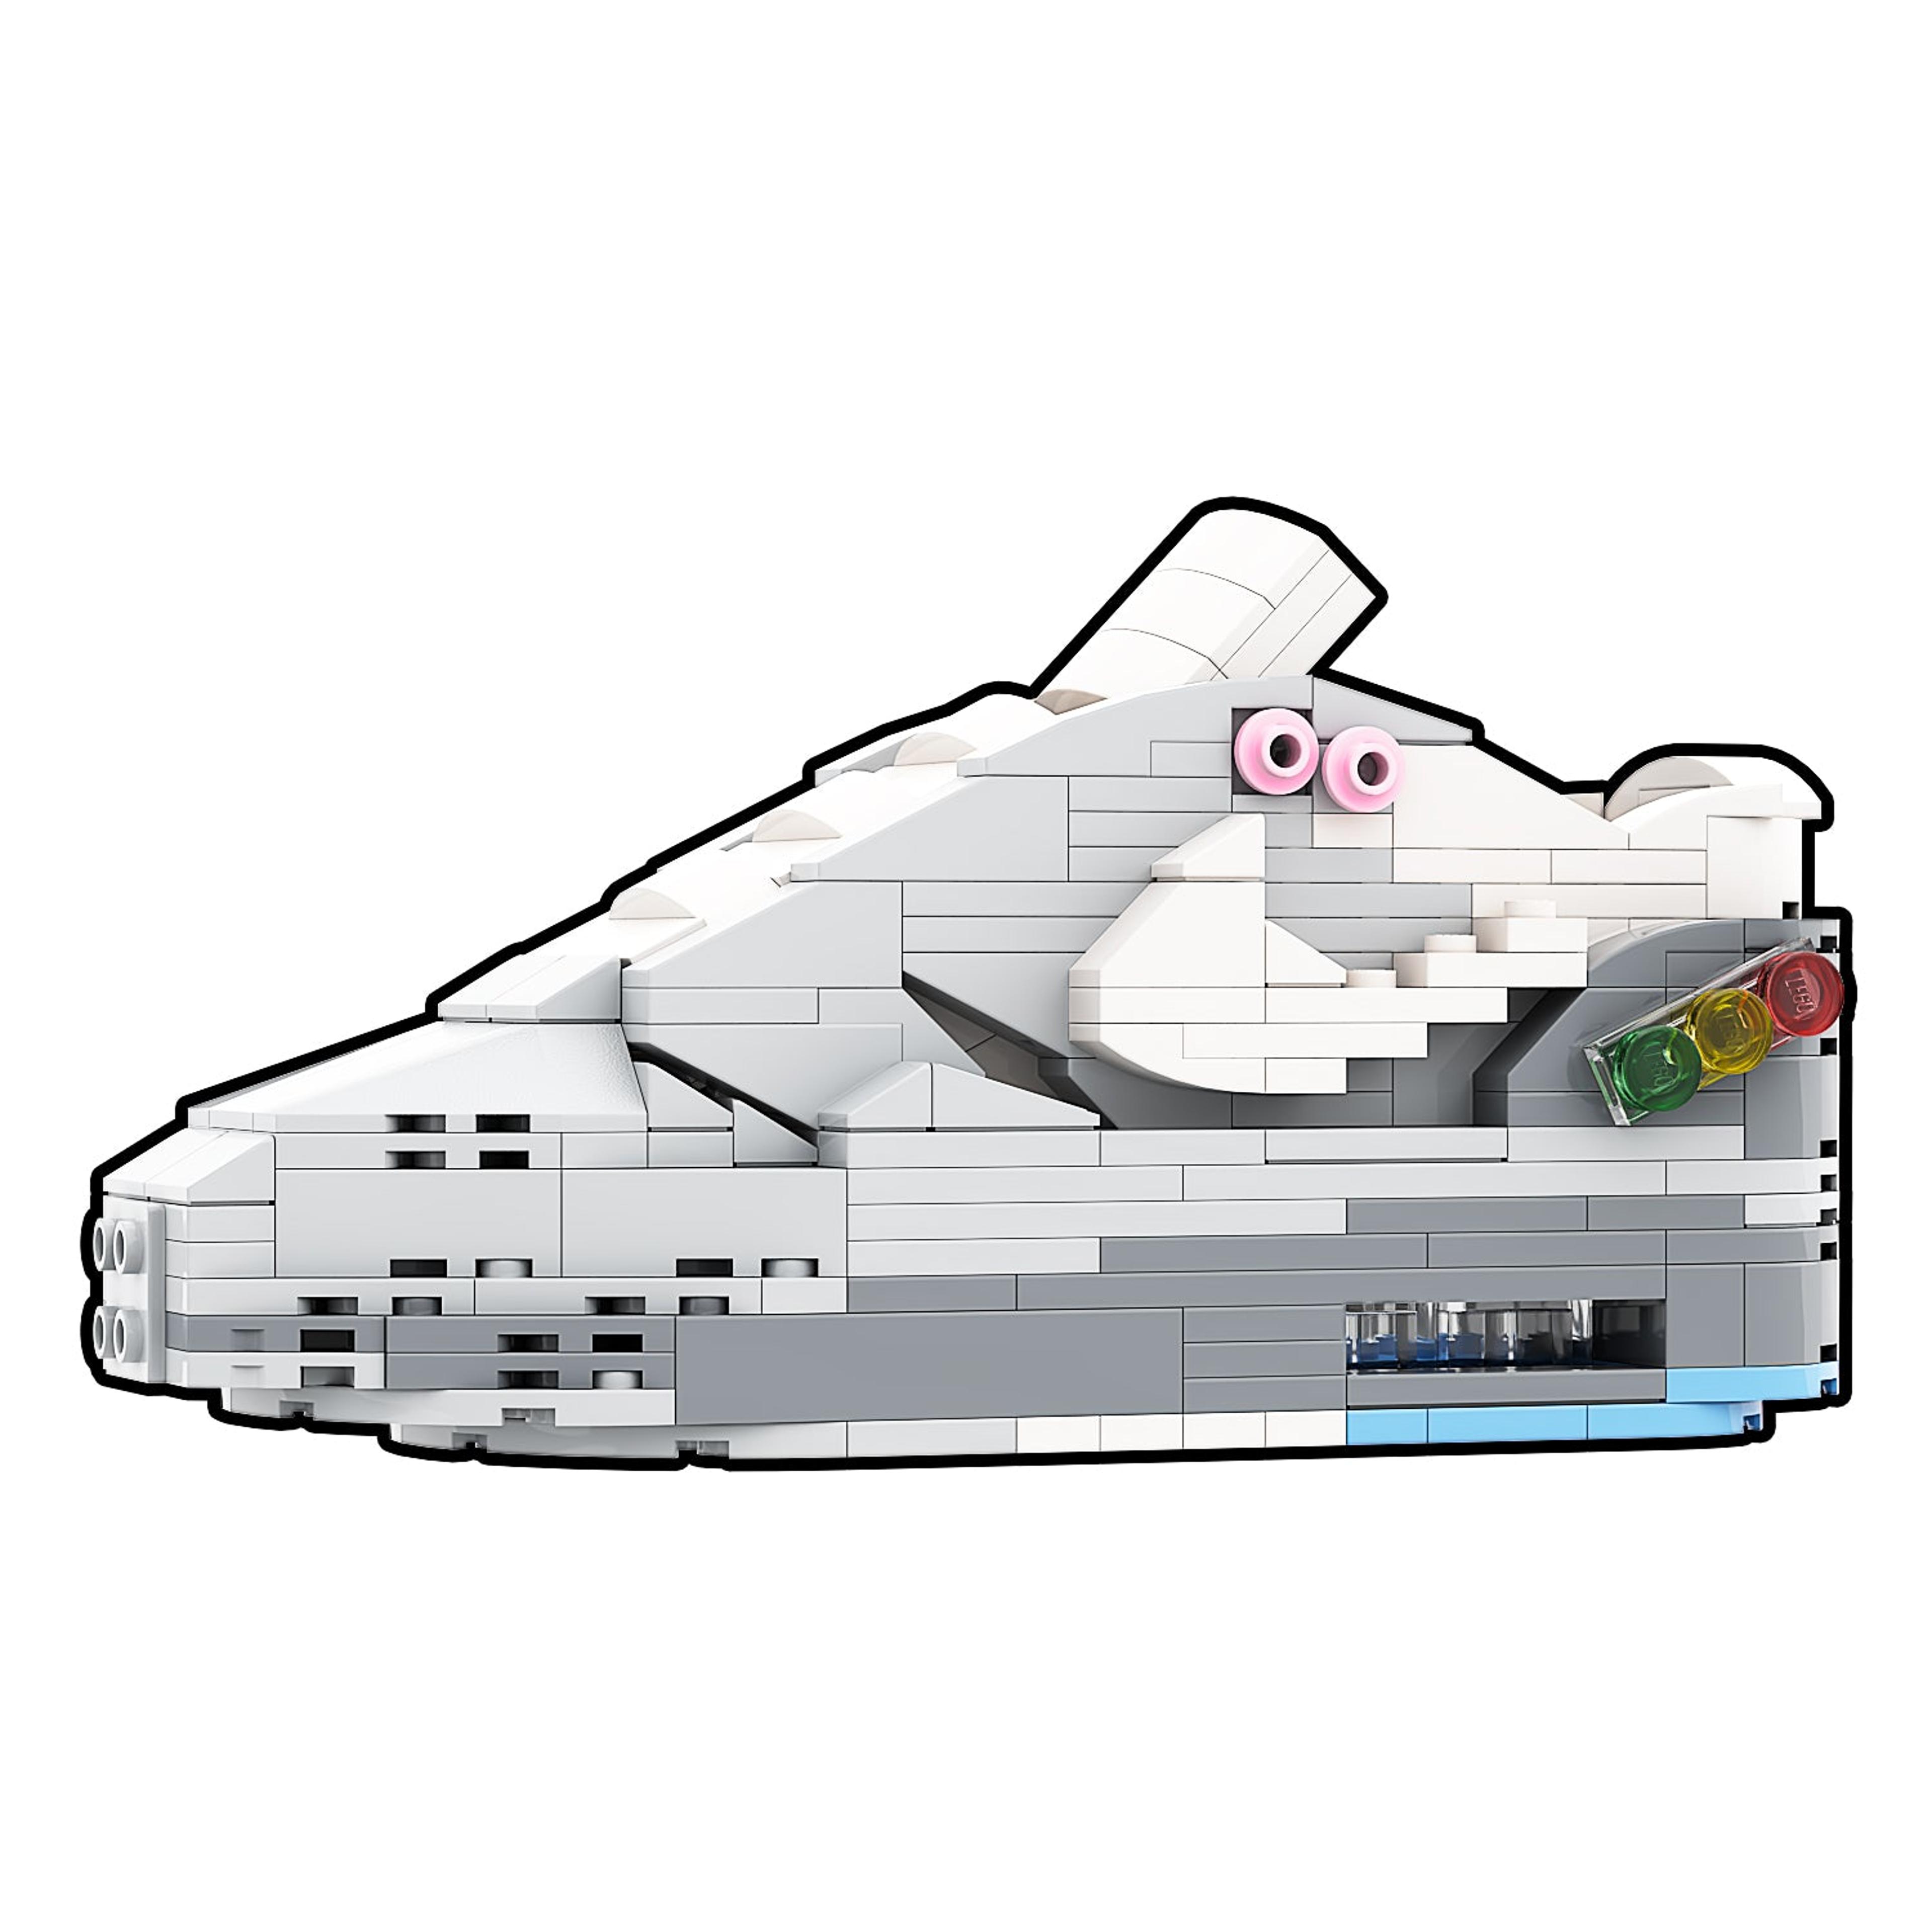 Alternate View 1 of REGULAR Air Max 1 "Mags MOC" Sneaker Bricks with Mini Figure